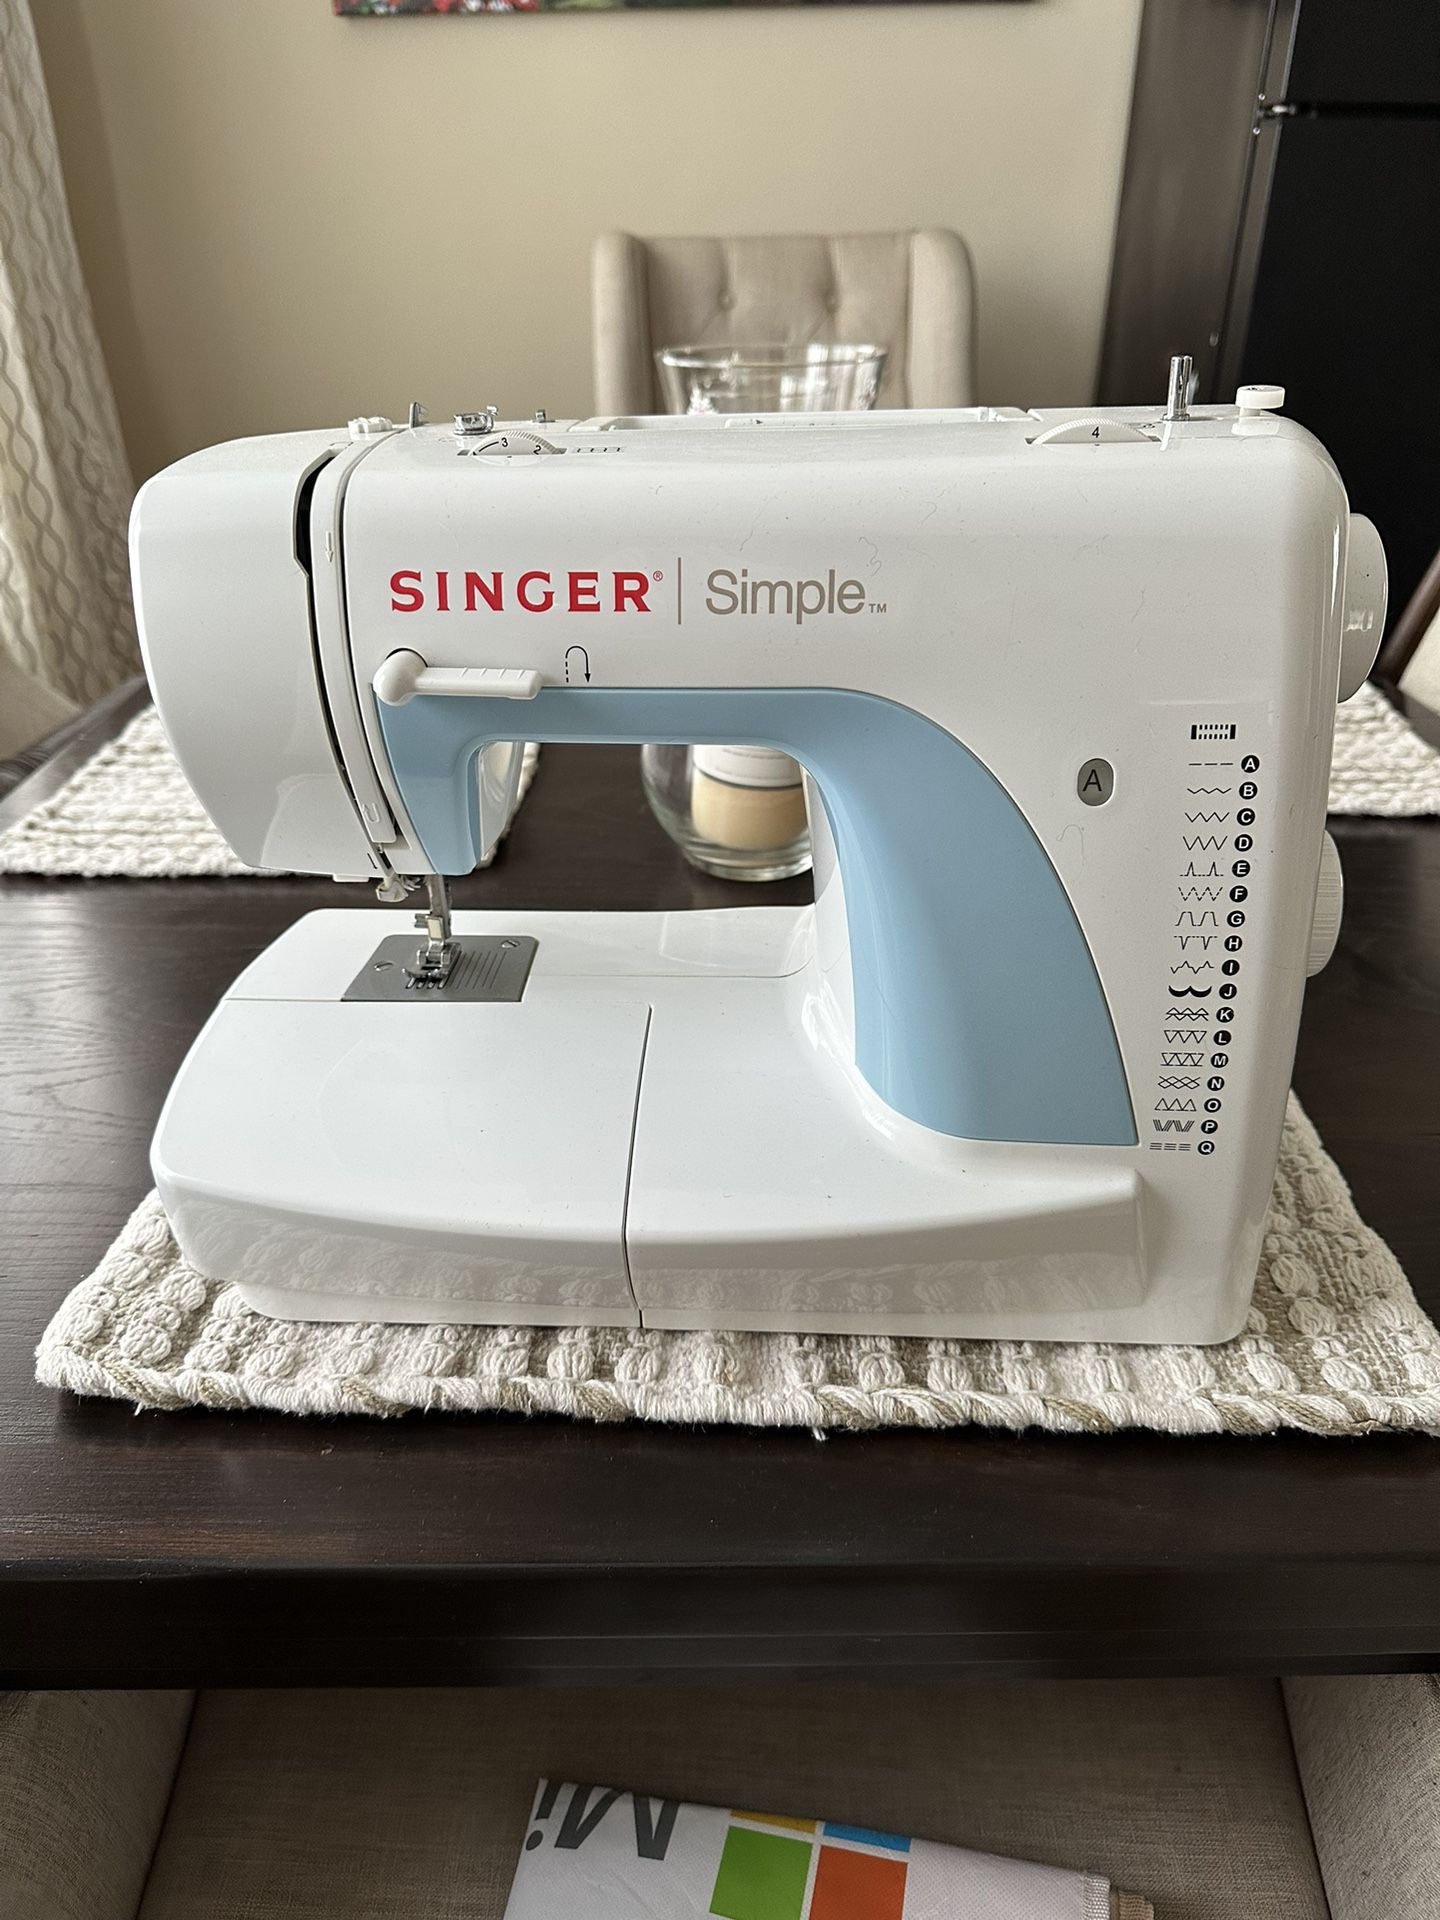 Singer Sewing Machine Model 3116